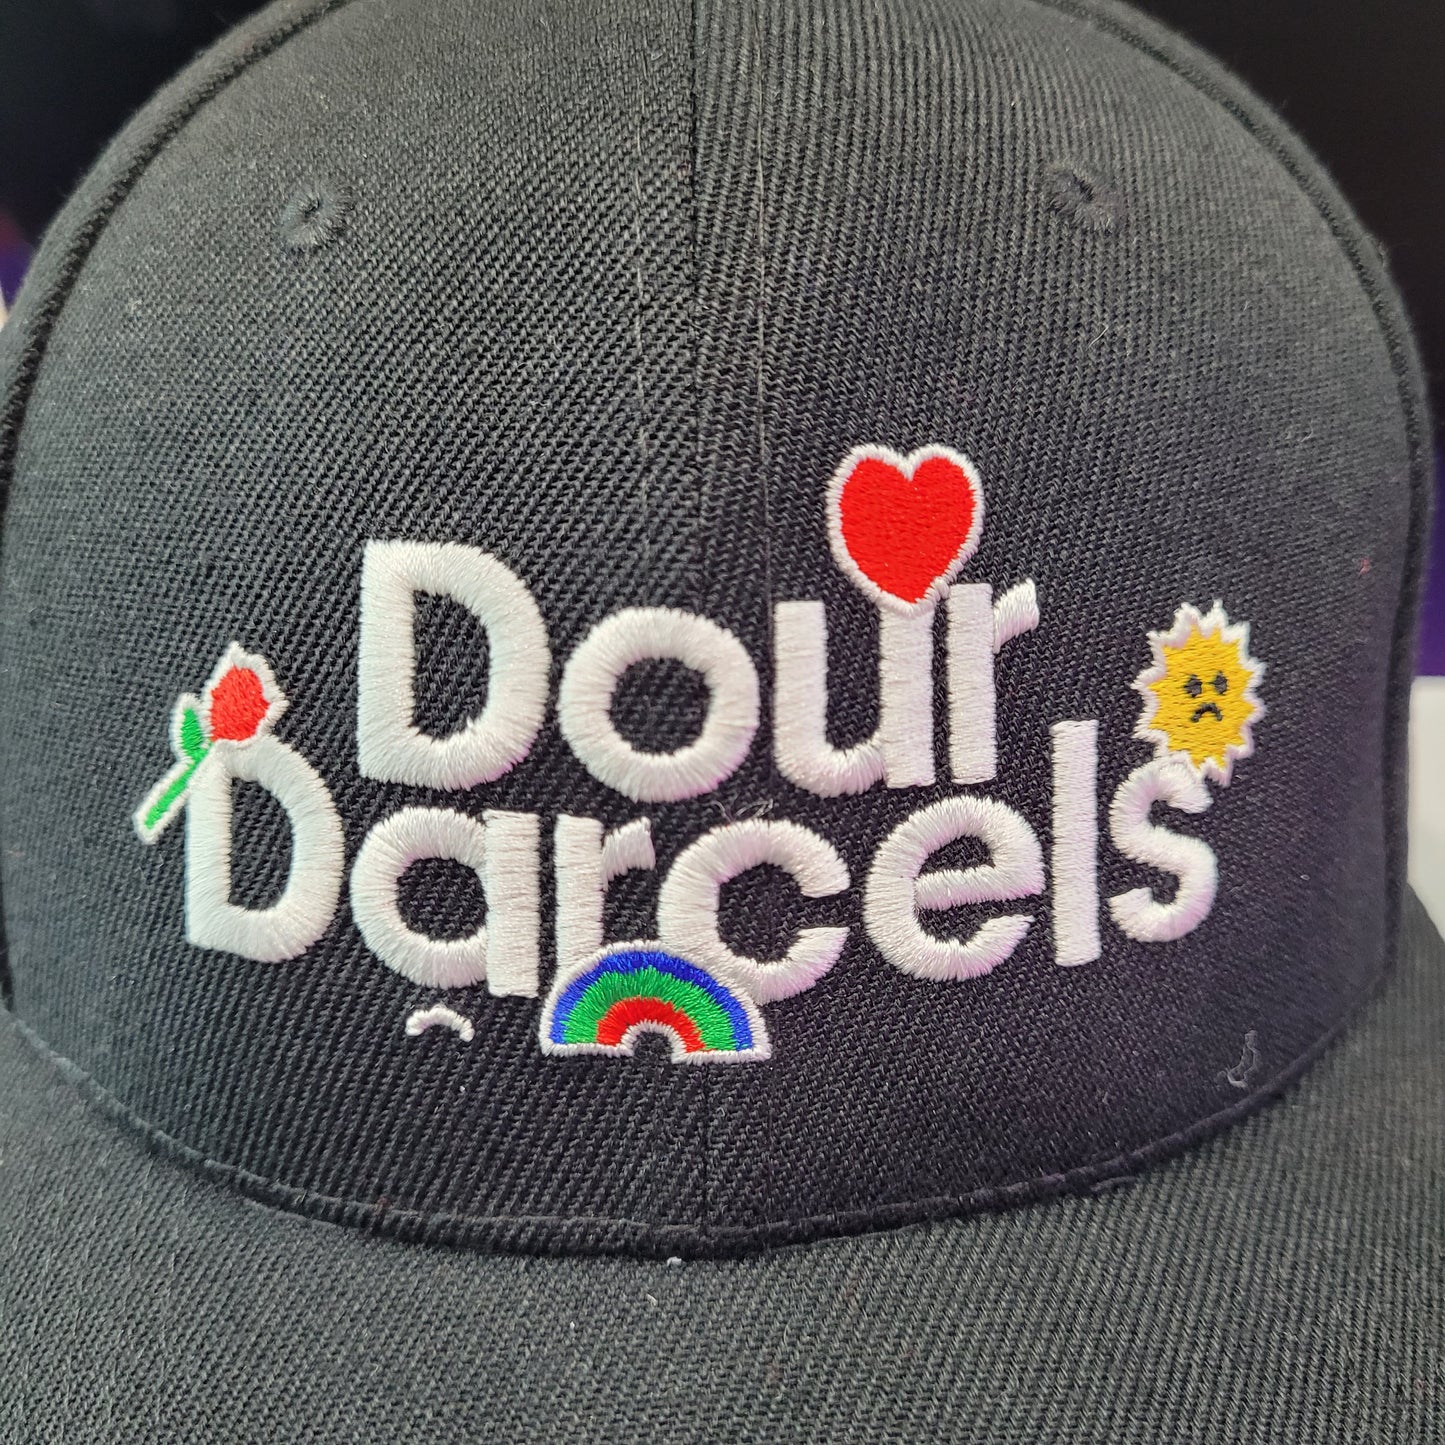 DD Cap - Dour Darcels Logo - Black